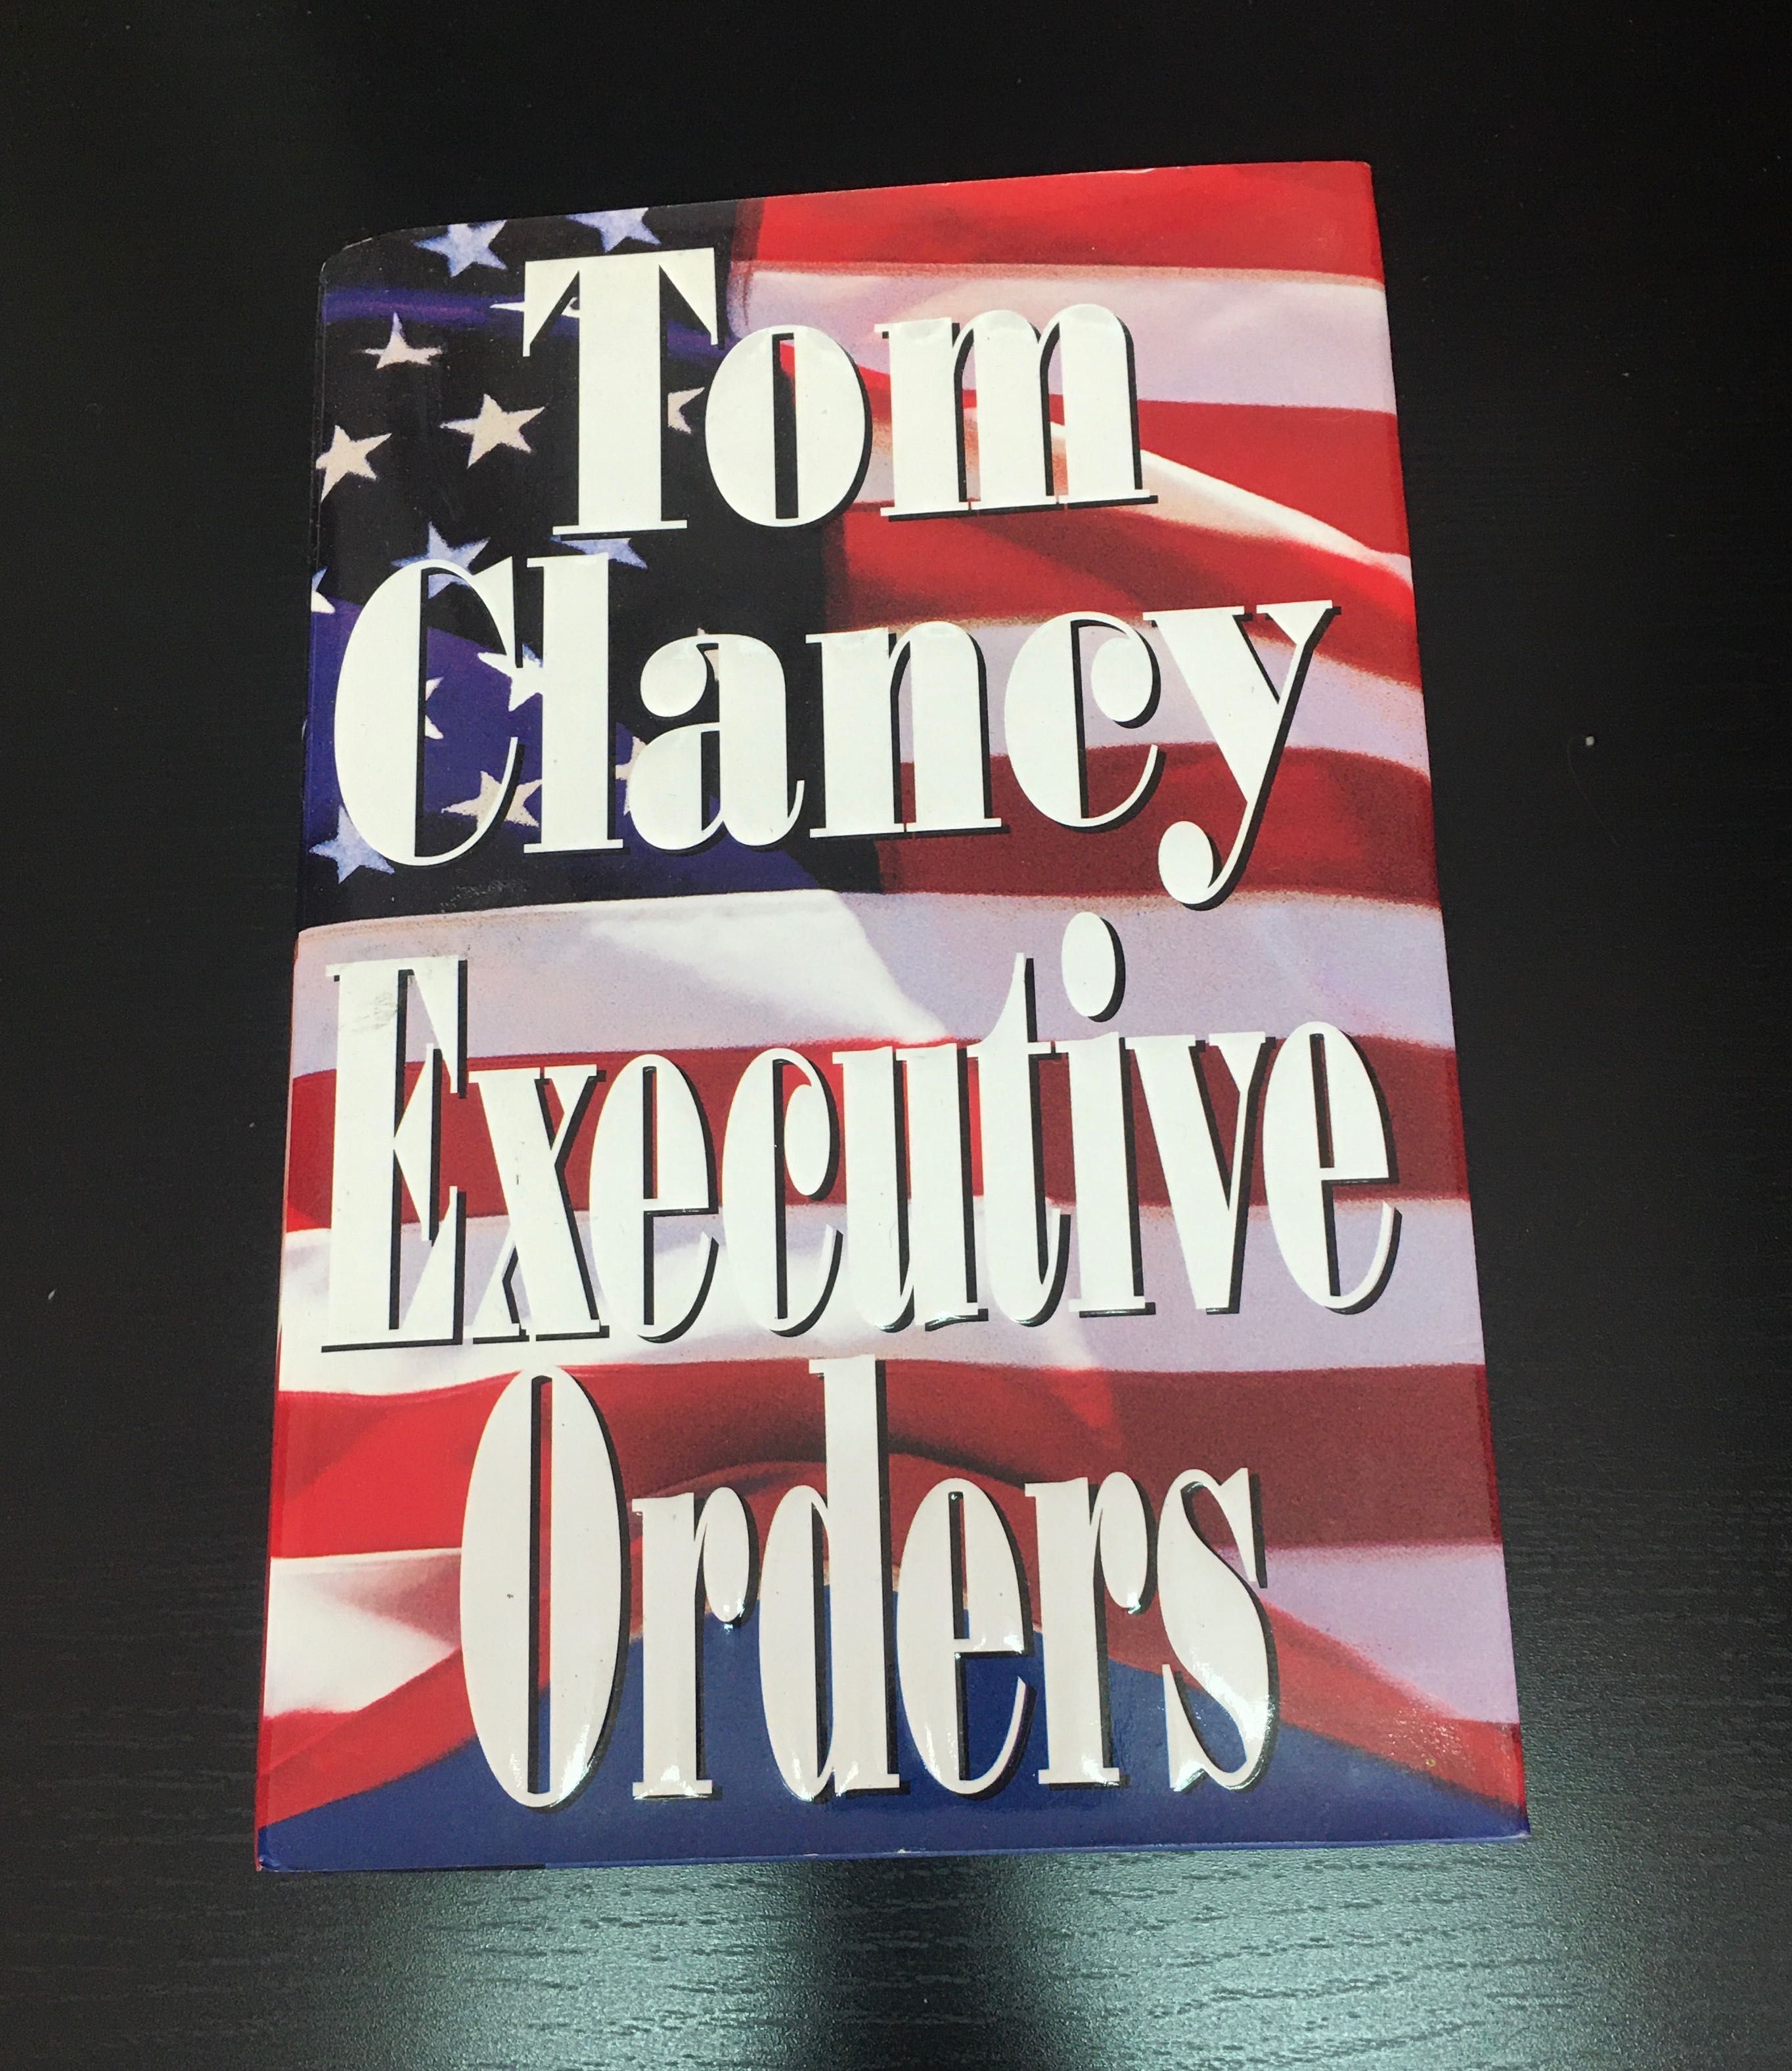 Executive orders, Tom Clancy